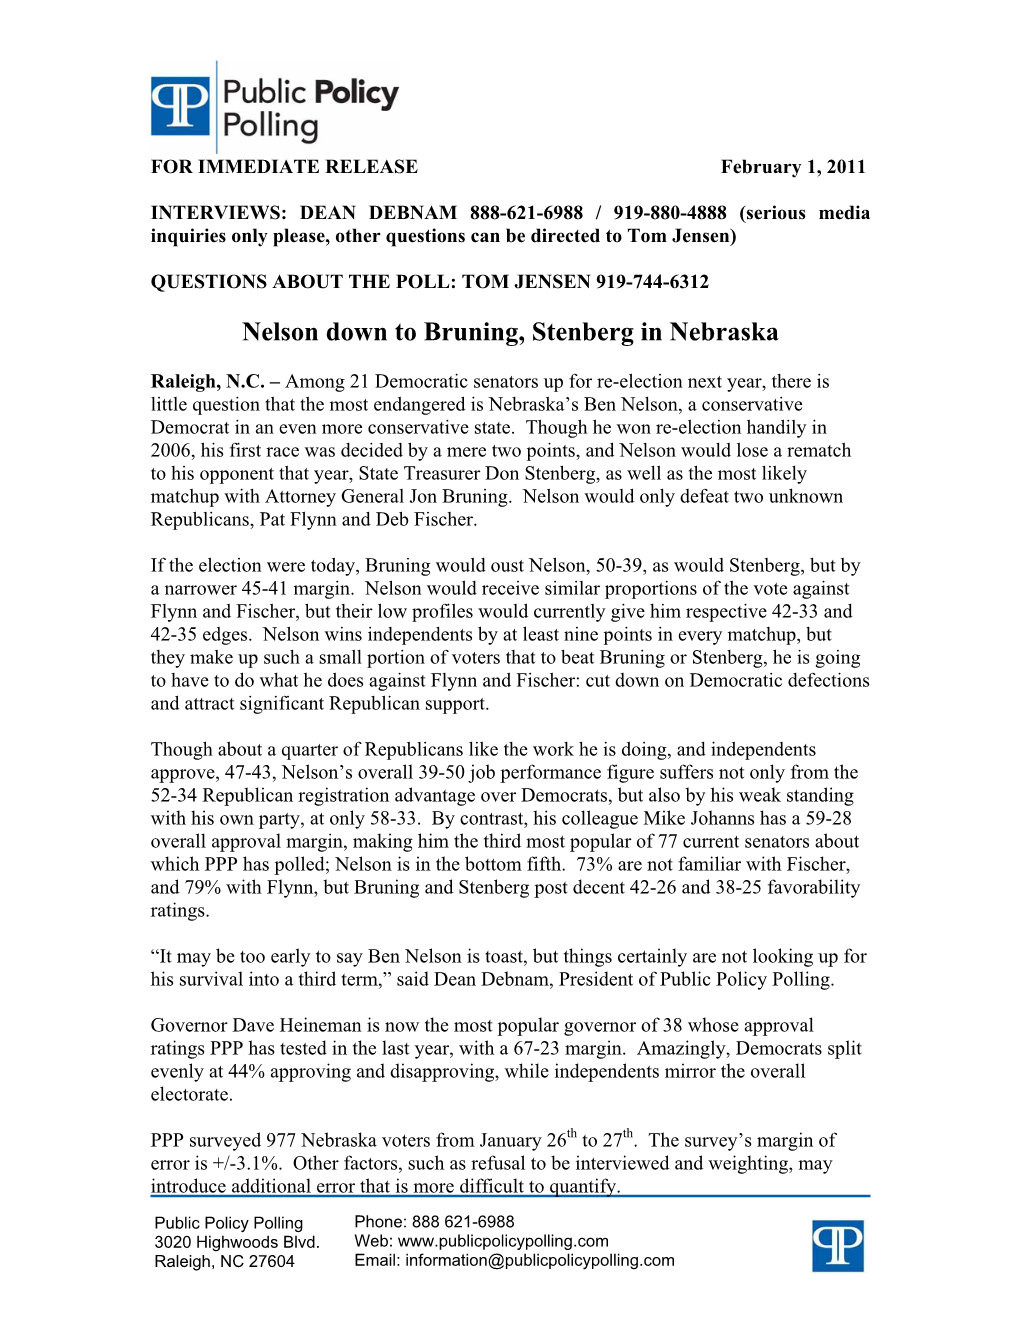 Nelson Down to Bruning, Stenberg in Nebraska